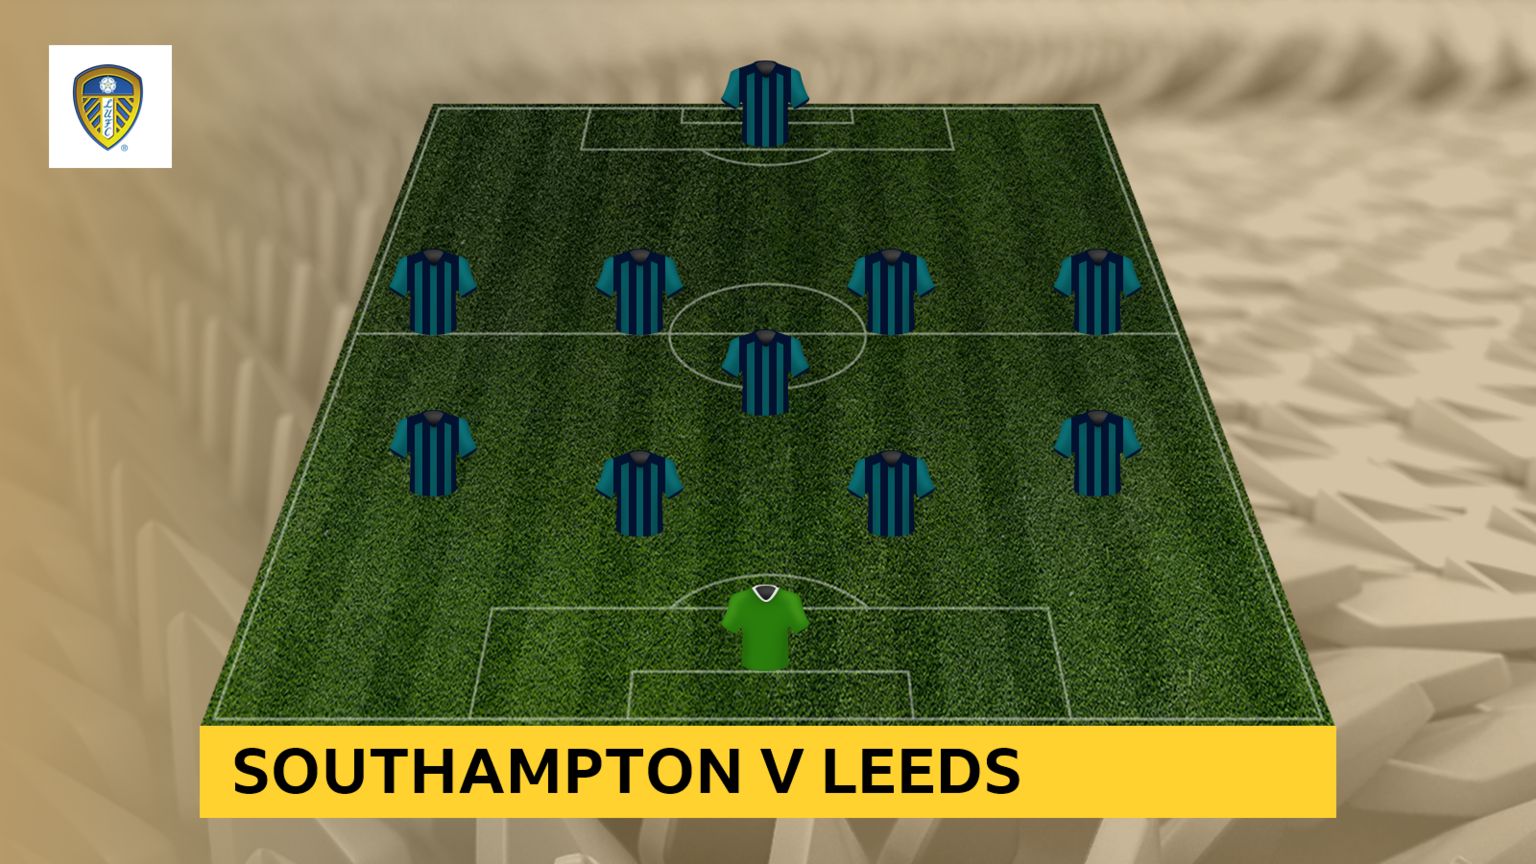 Leeds team selector graphic for Southampton away